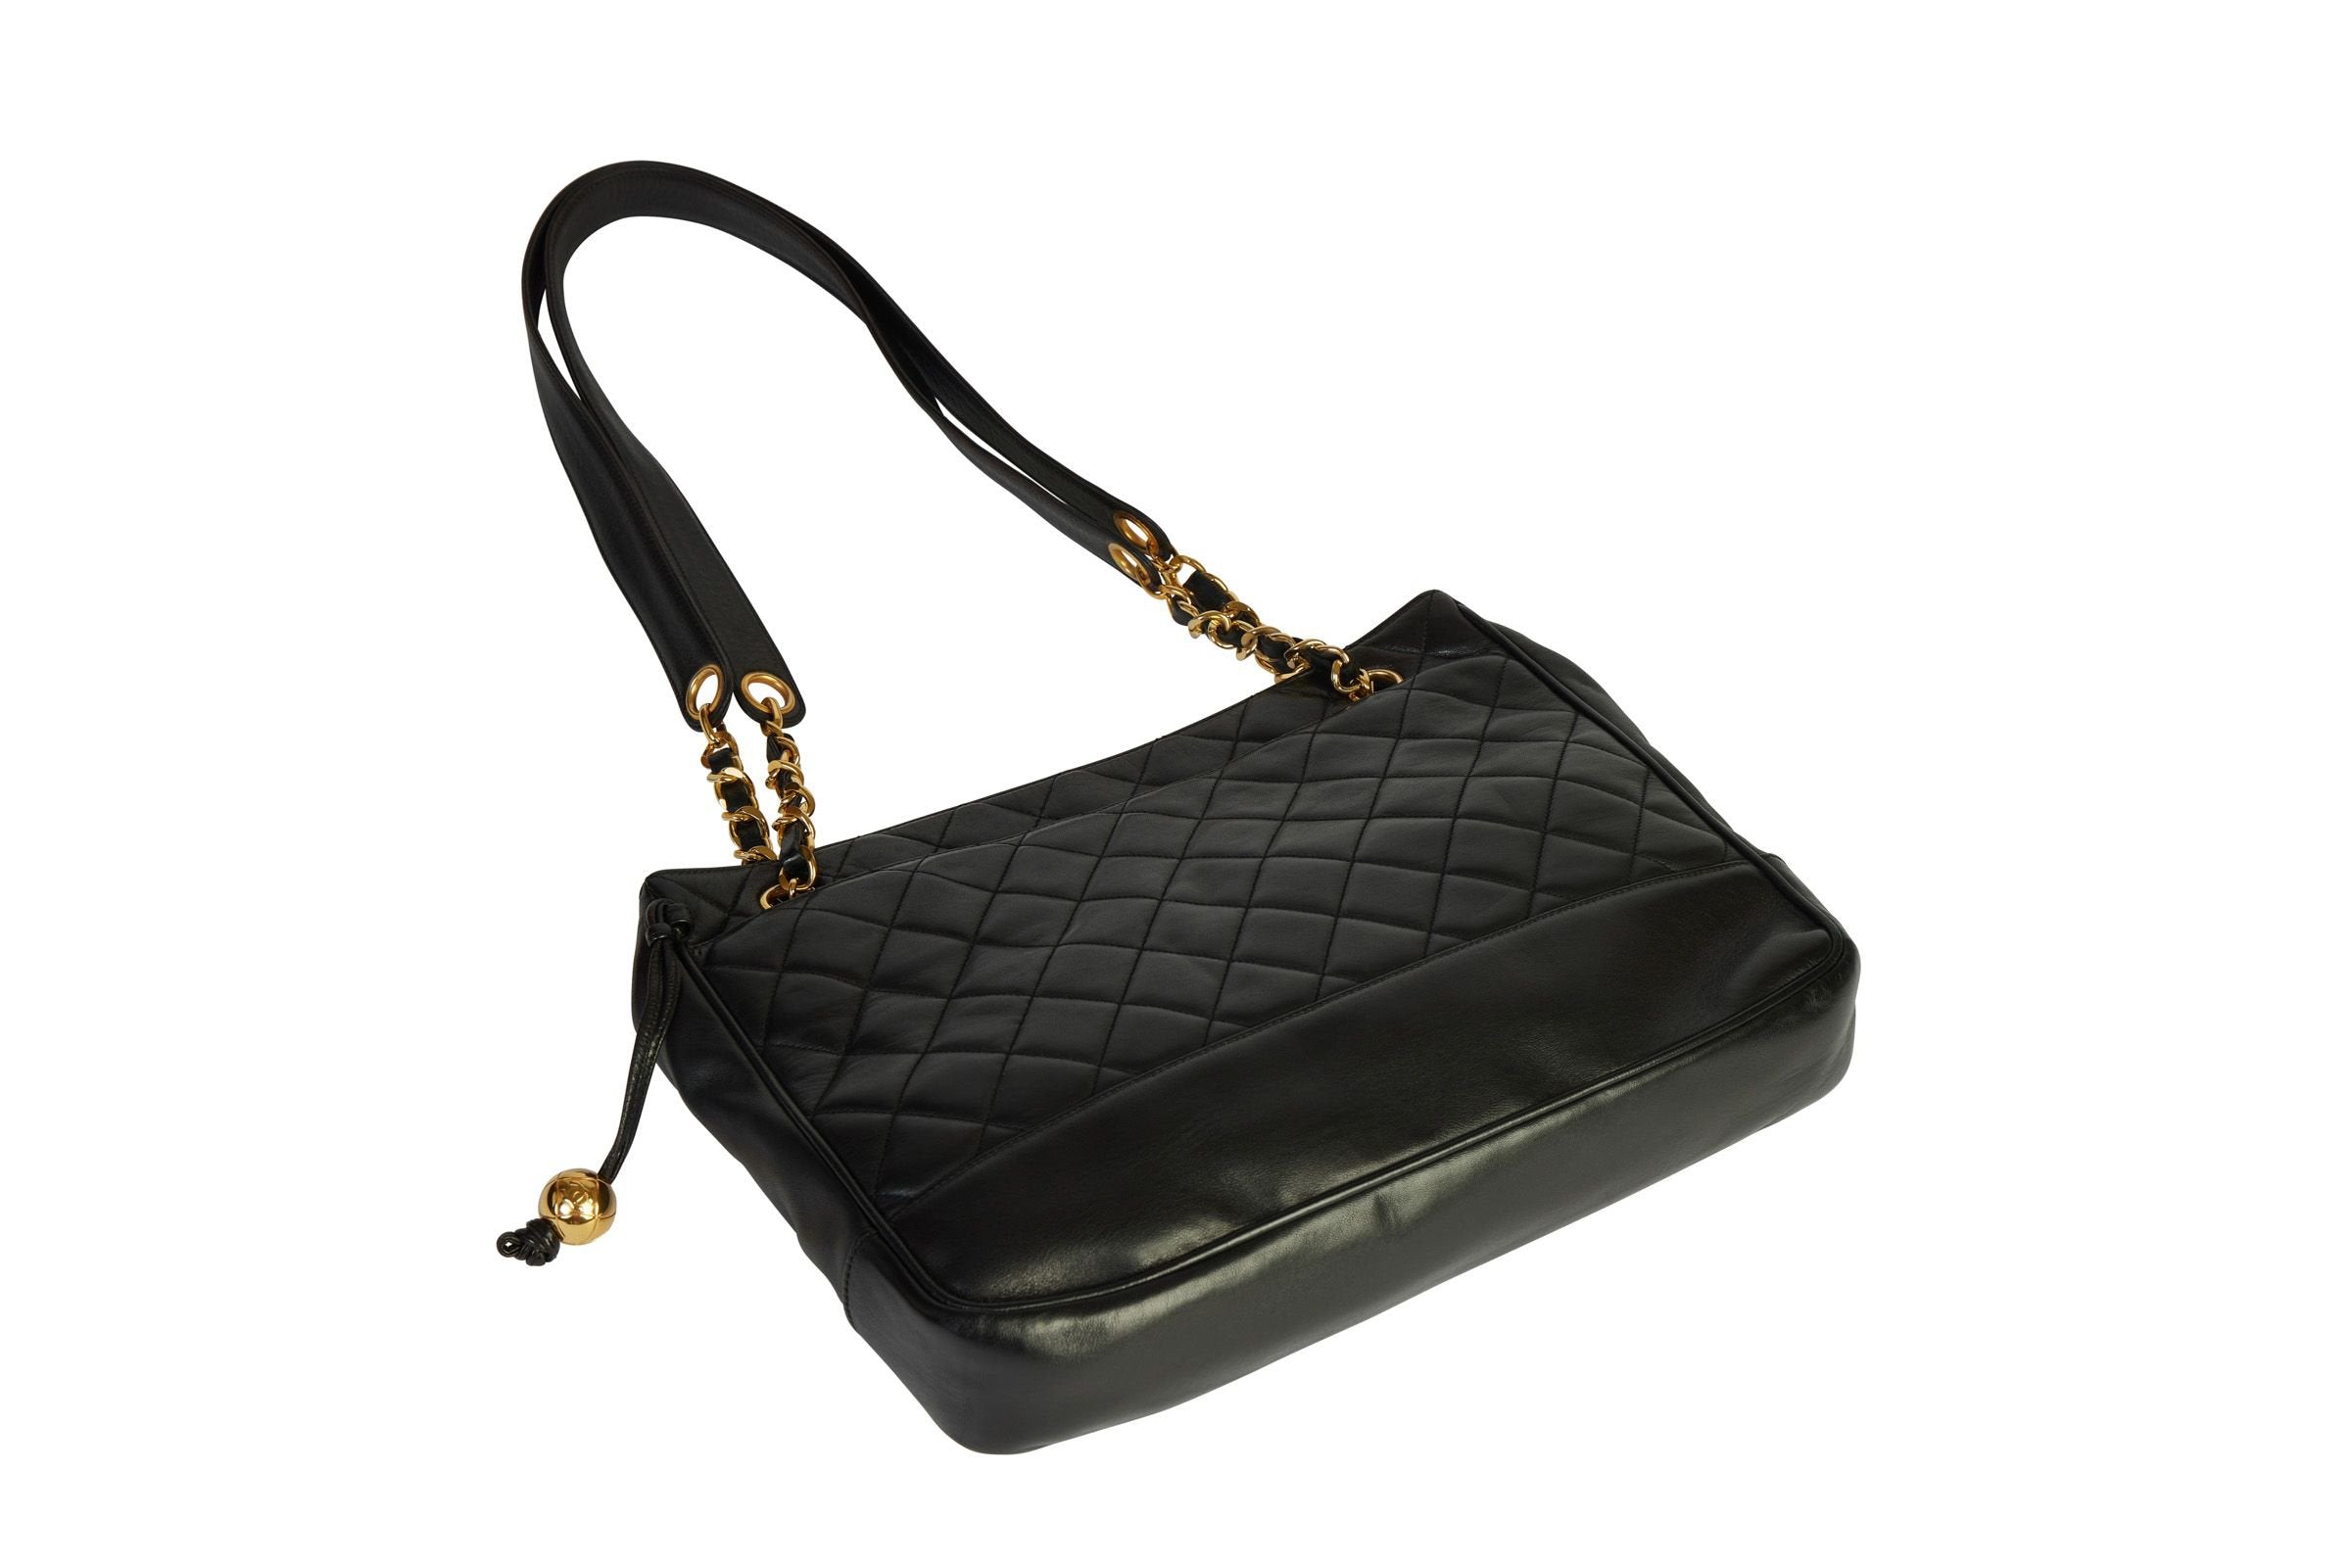 Chanel - Authenticated Handbag - Patent Leather Black Plain for Women, Good Condition